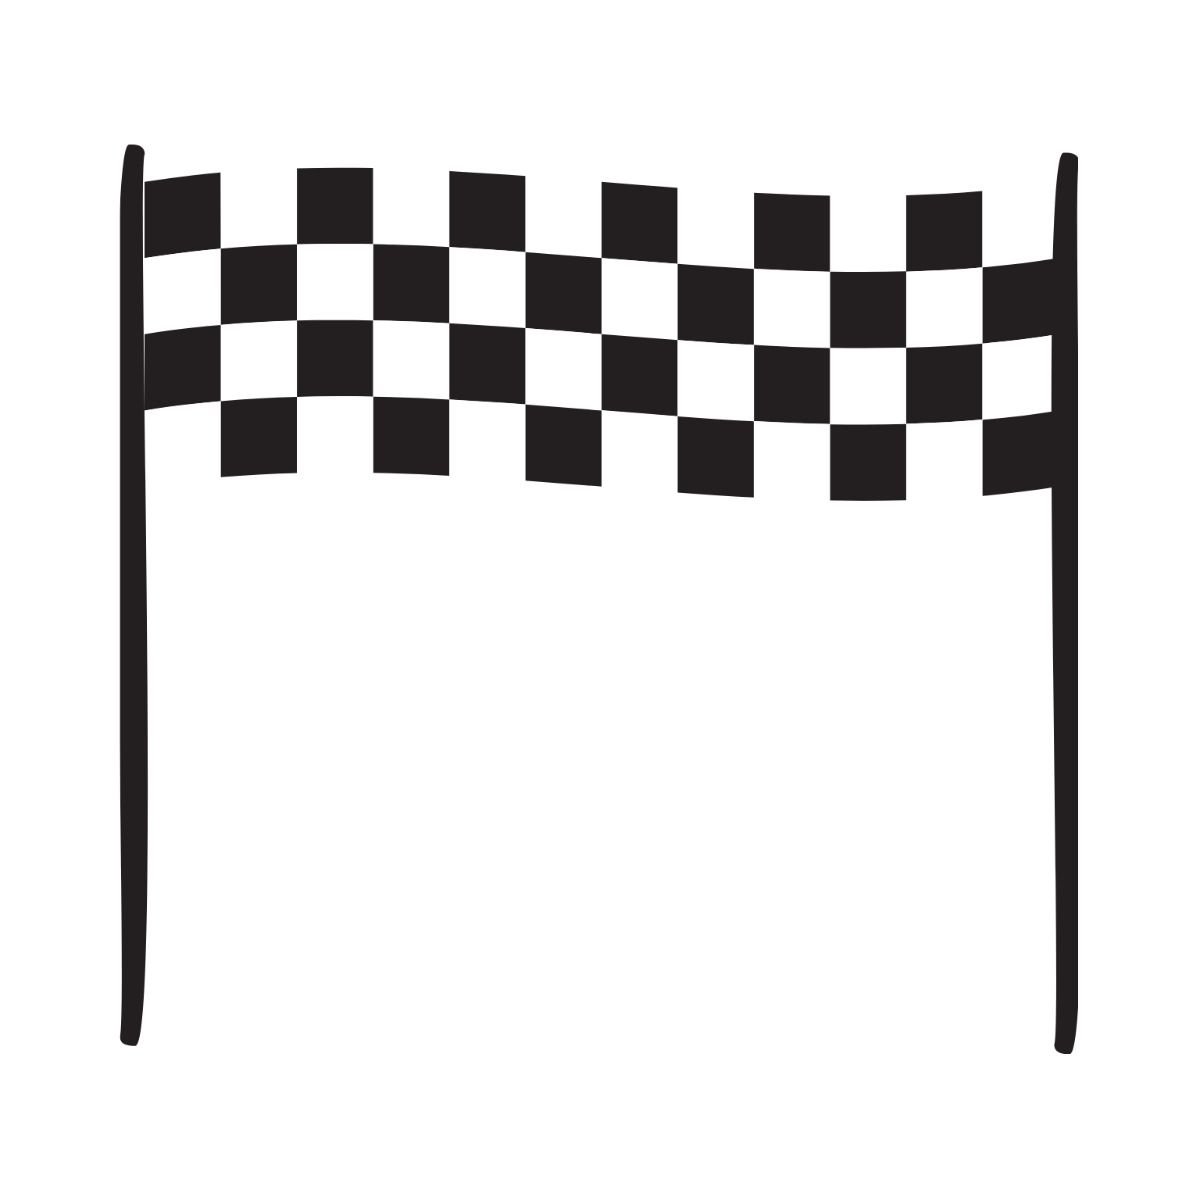 Racing Start Flag clipart Template